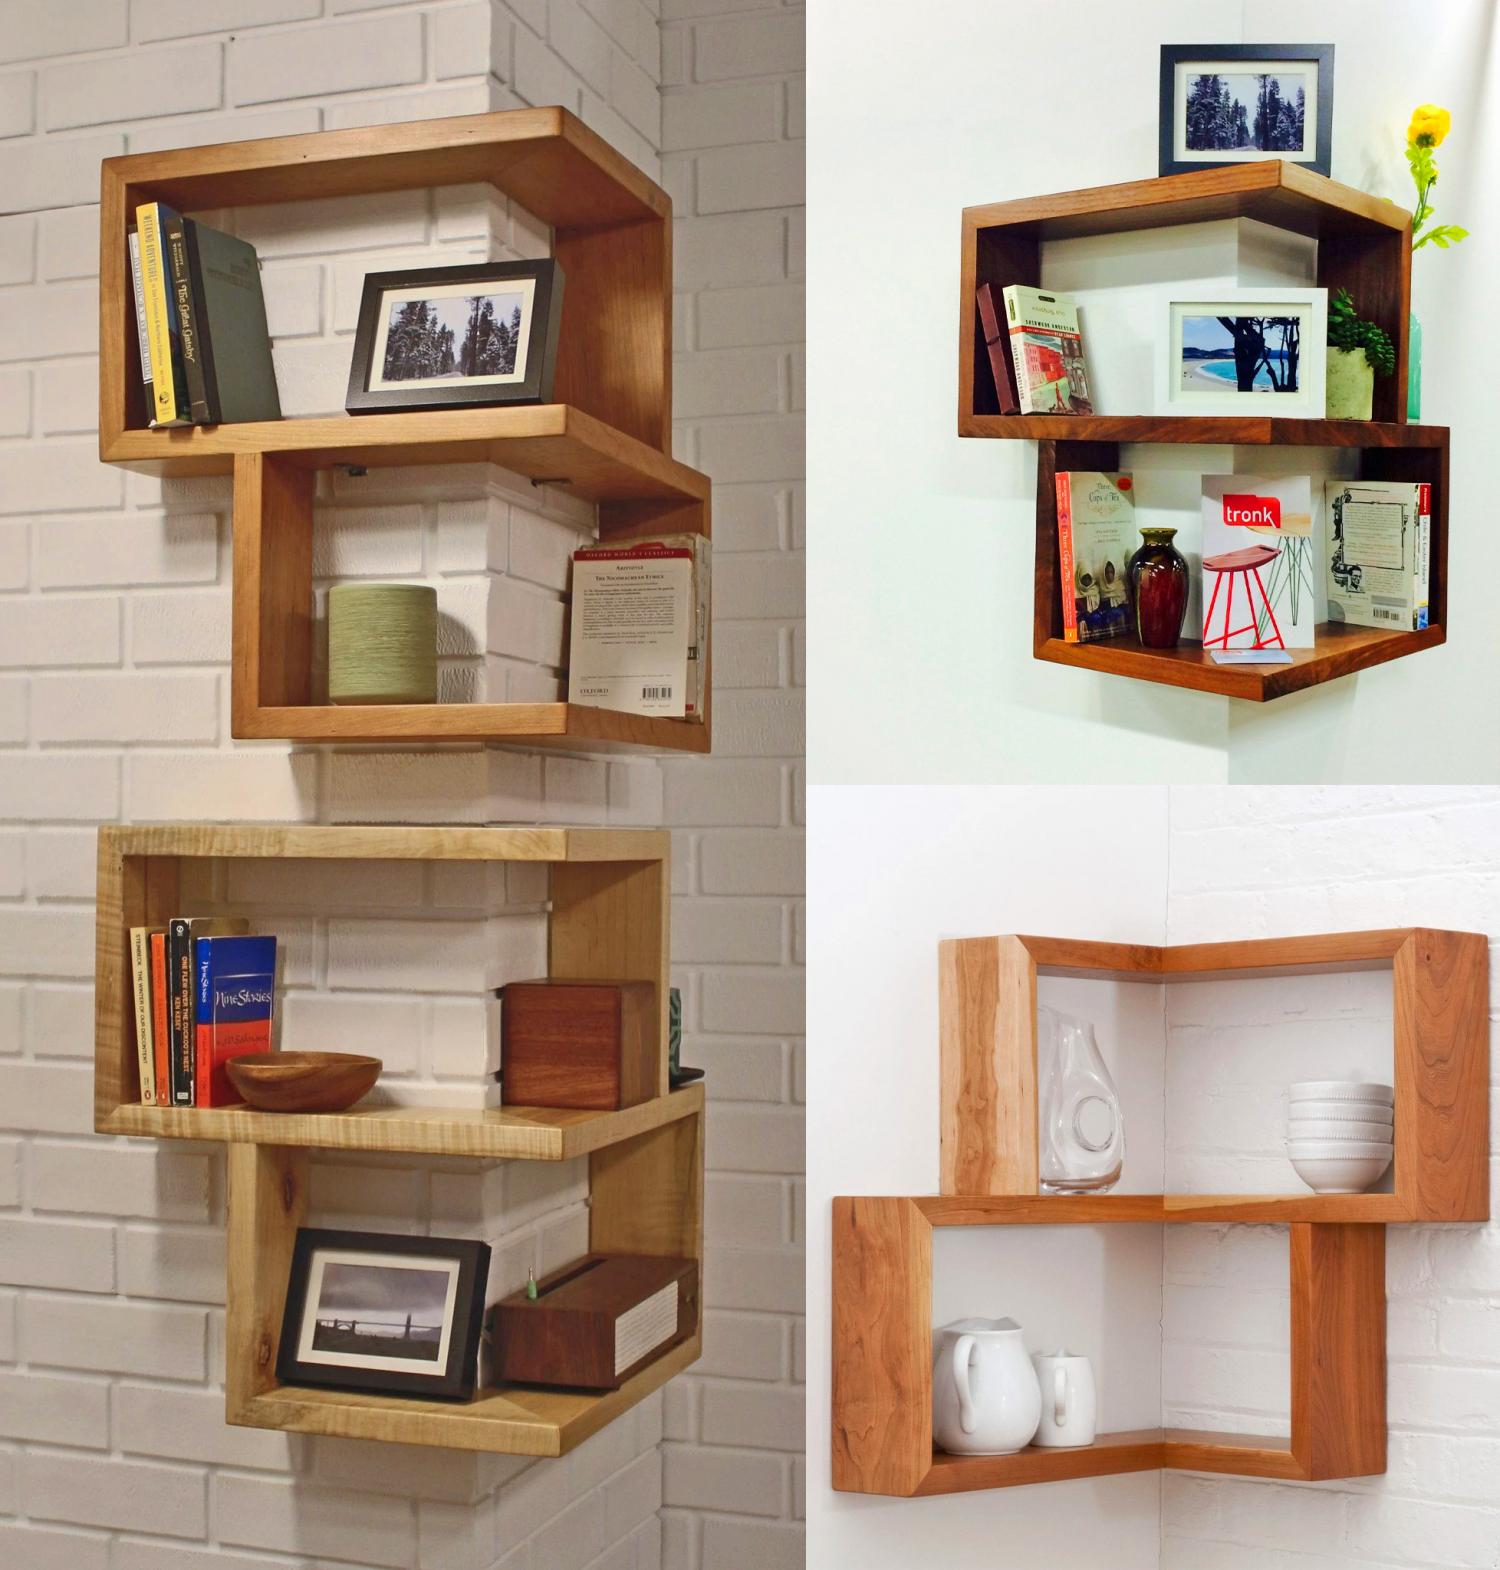 Around the corner shelves design ideas - Wrap-around corner shelving and bookcases